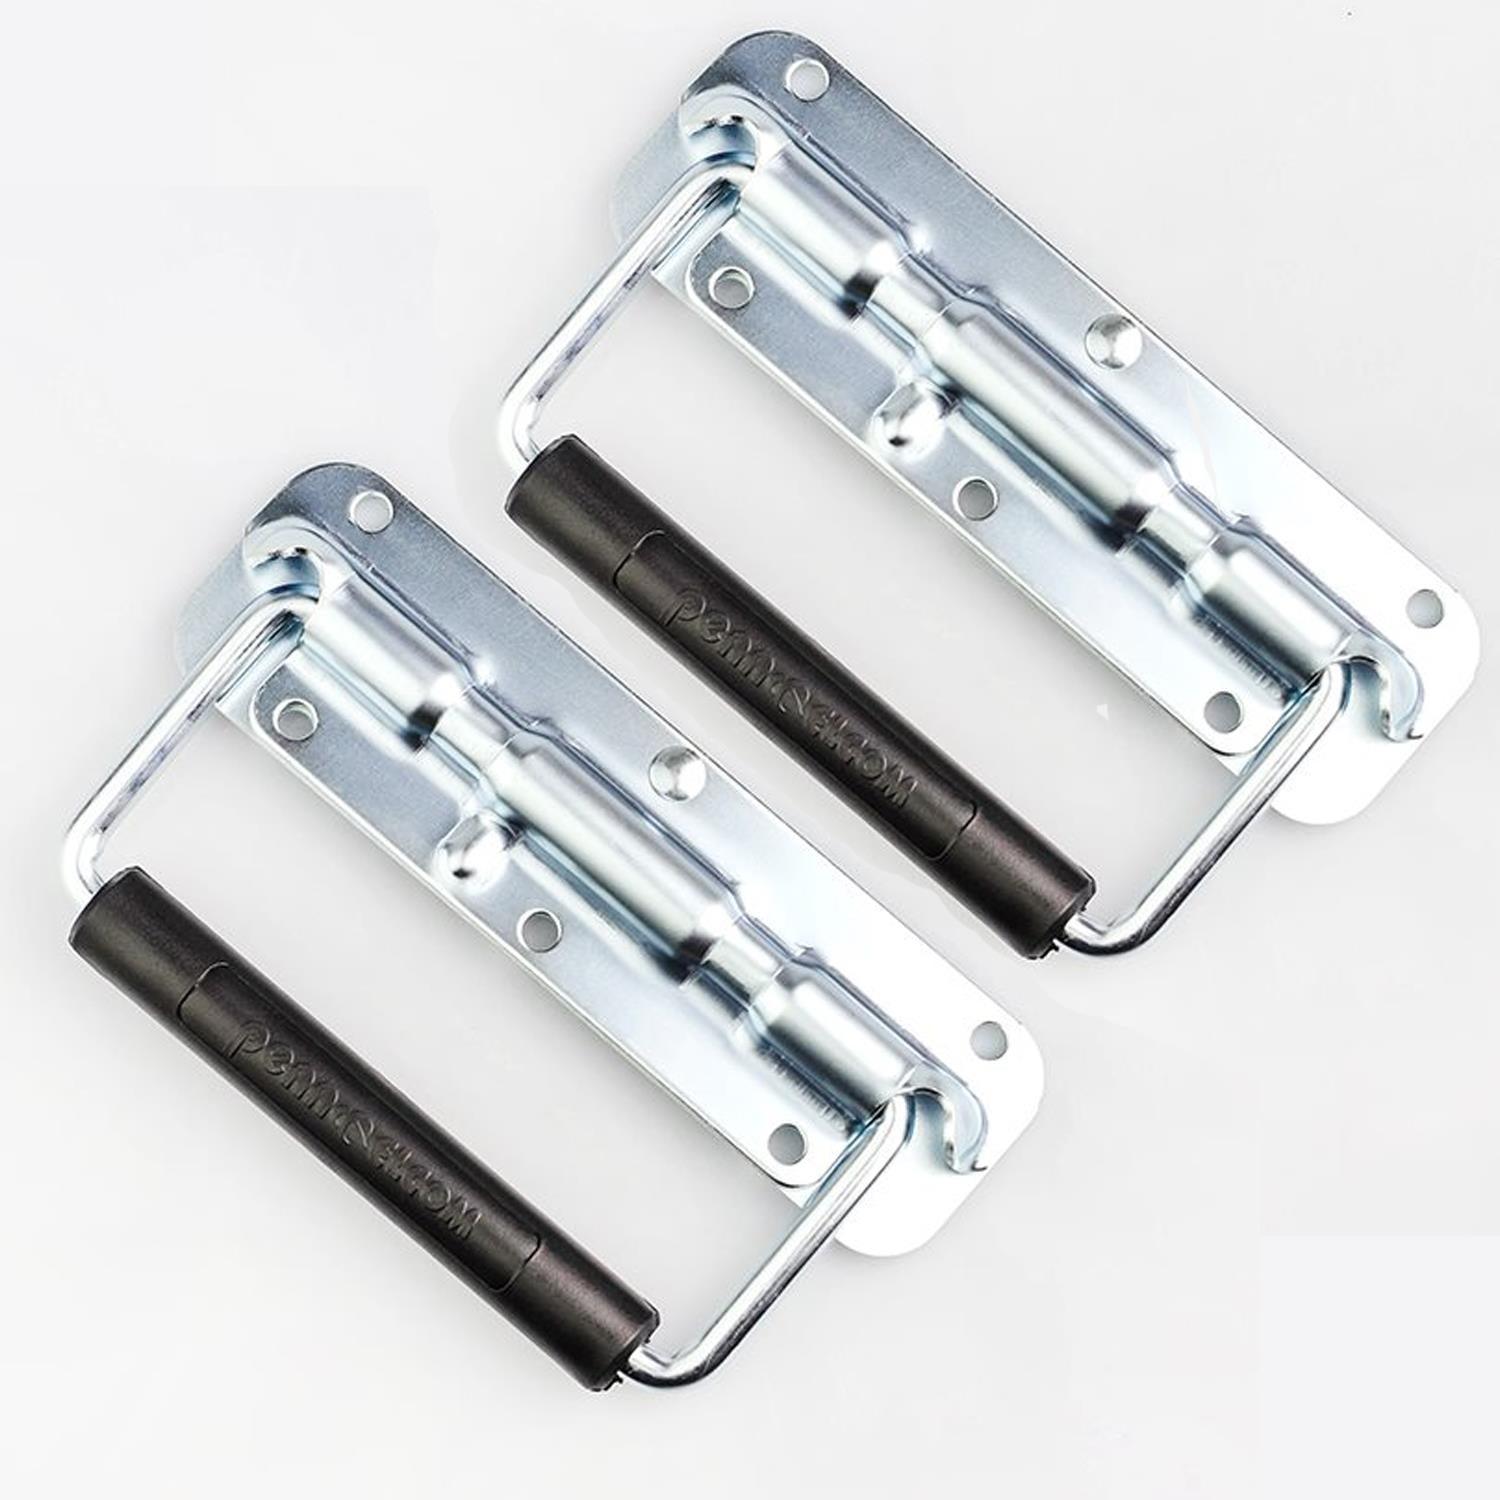 2 x Silver Steel Sprung Drop Handle for Flight Case or Speaker Cabinet, Flight Cases - DY Pro Audio